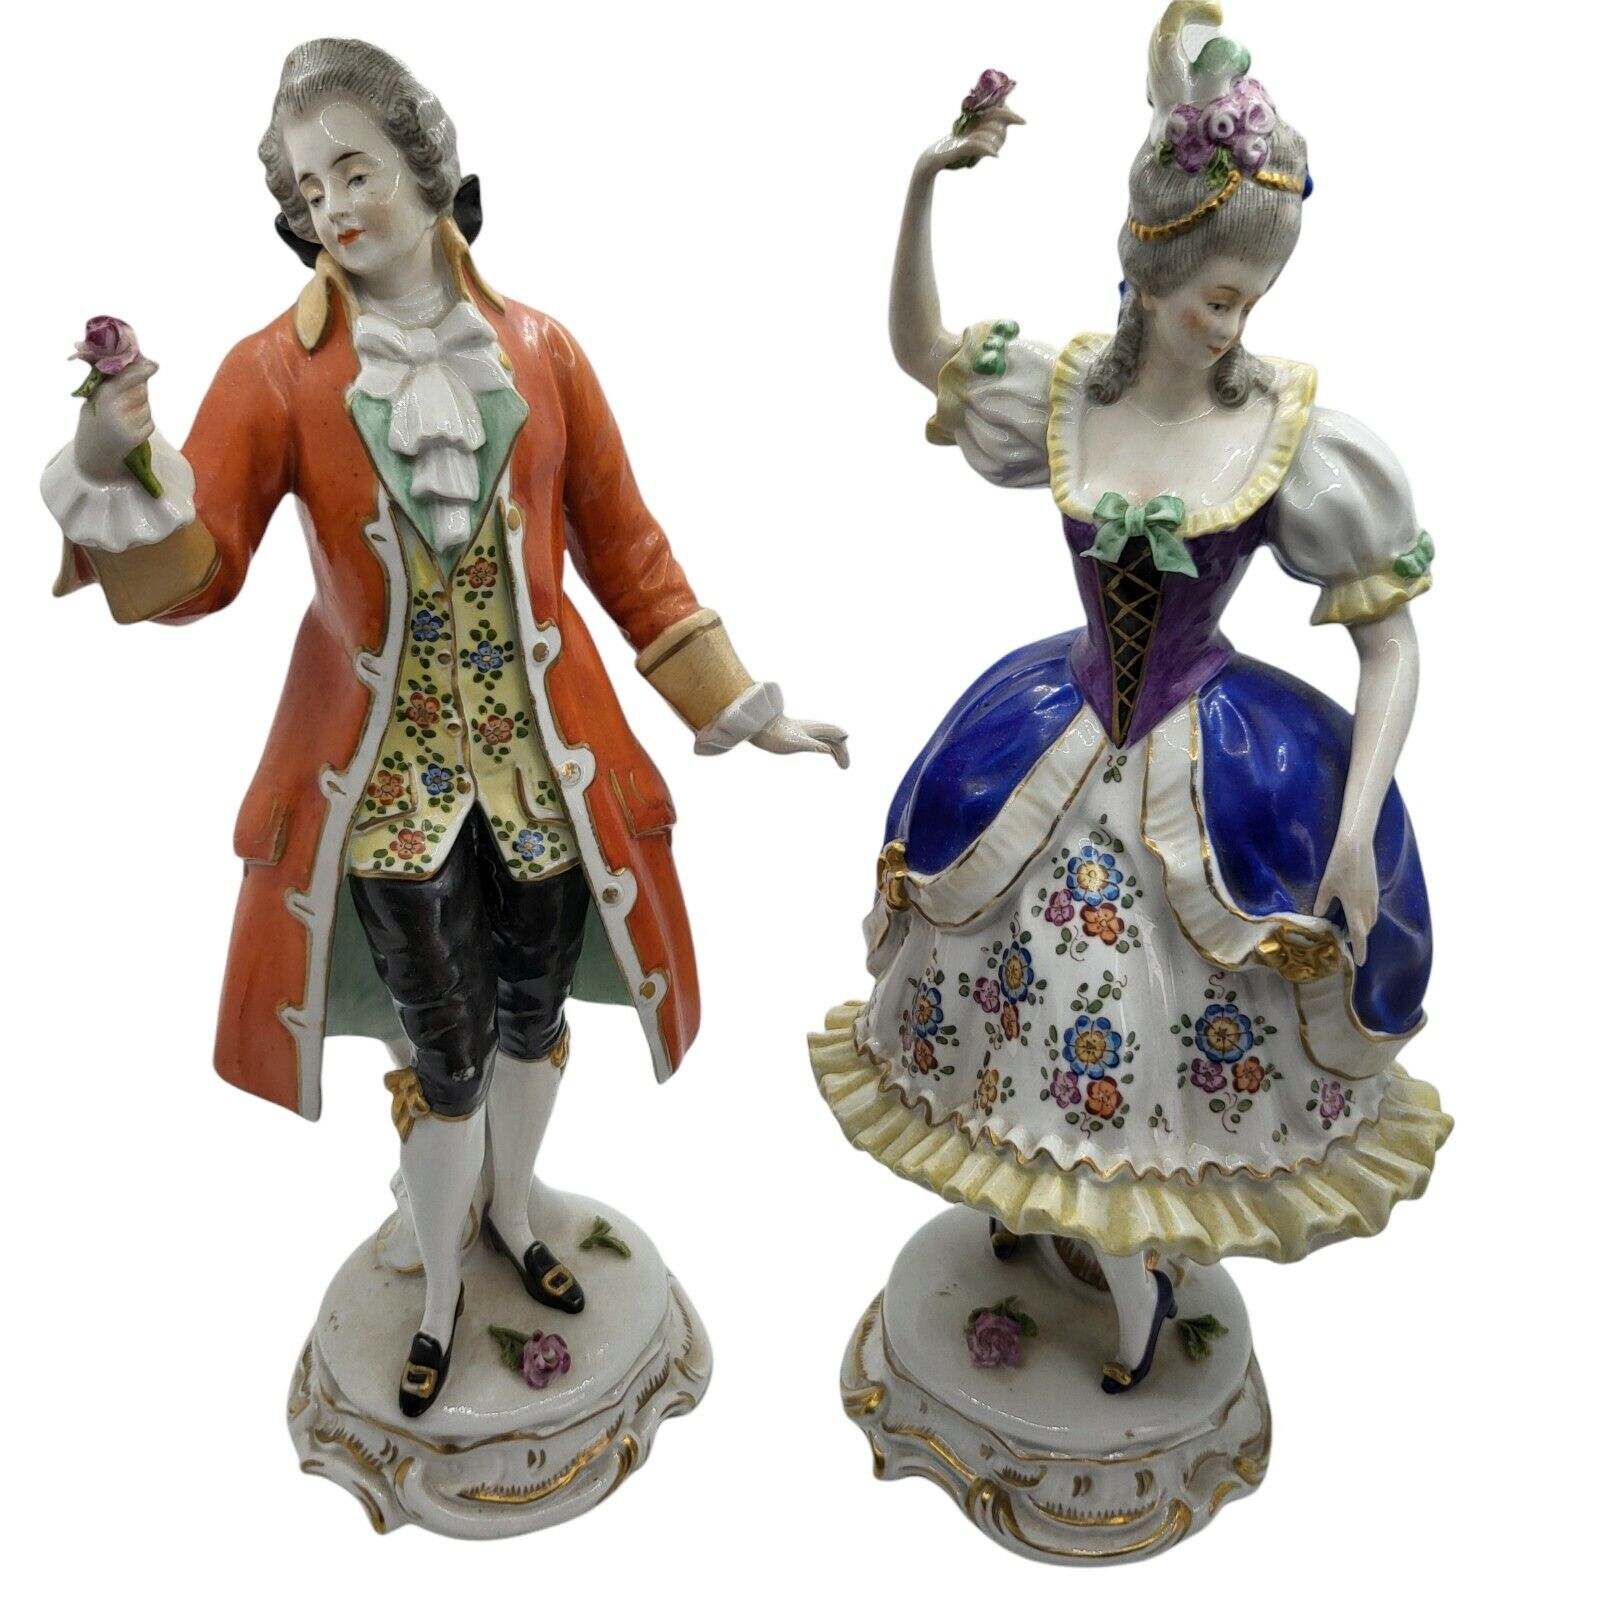 Scheibe Alsbach Kister German Antique Porcelain Dancing Rose Figurine Pair